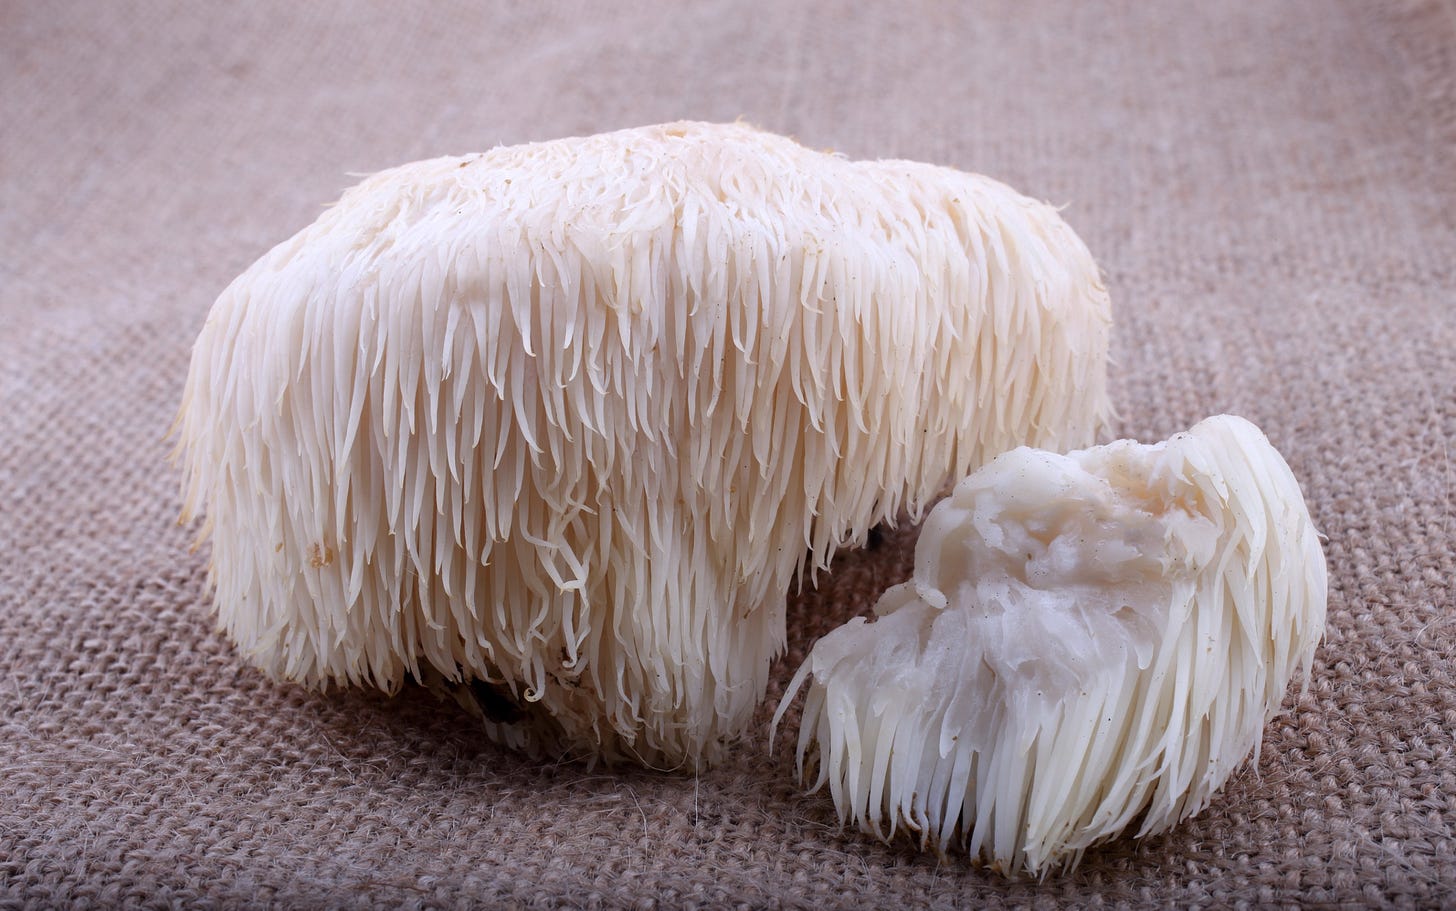 Neuroscientists say this mushroom “stimulates nerve growth and improves memory” – Wel.nl